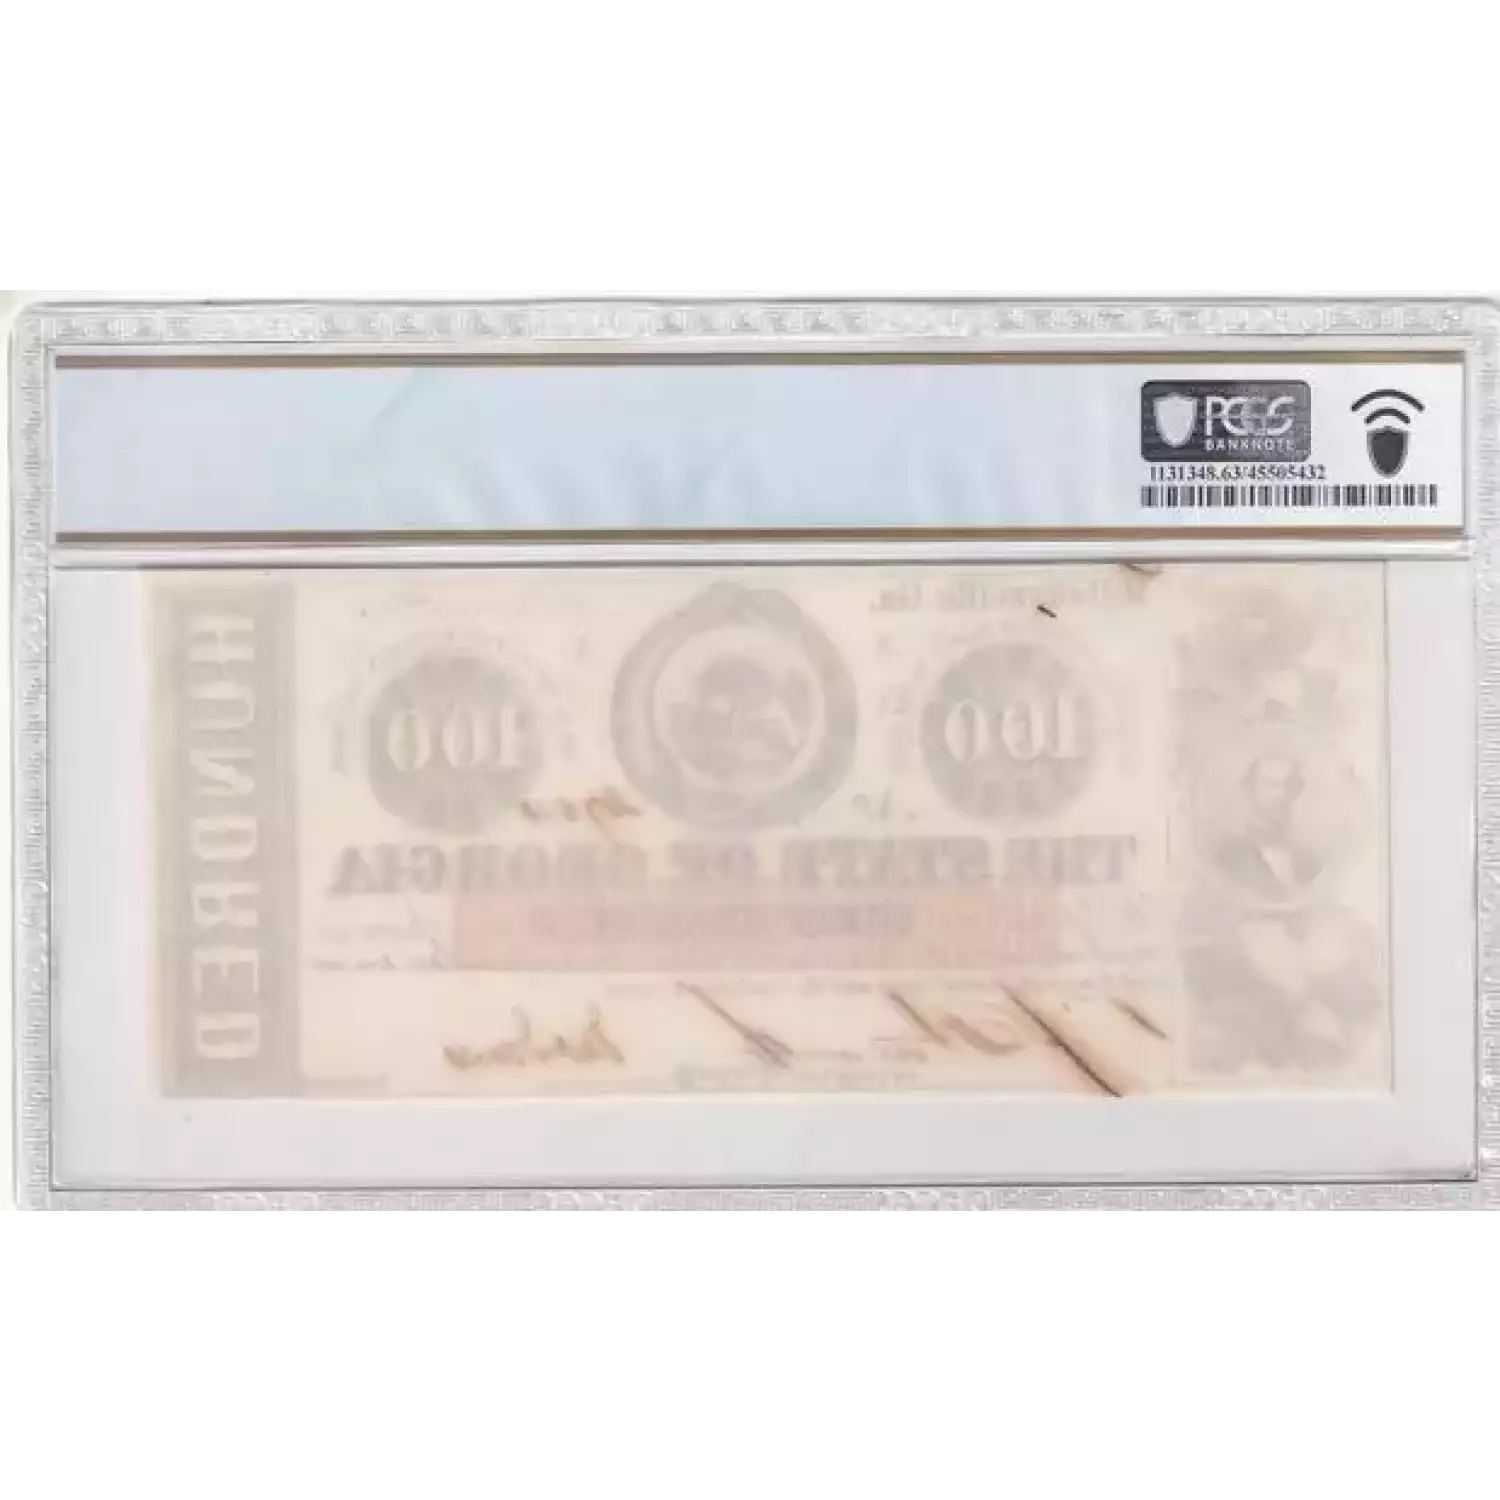 $100 1863 Treasury Note - Milledgeville, Georgia